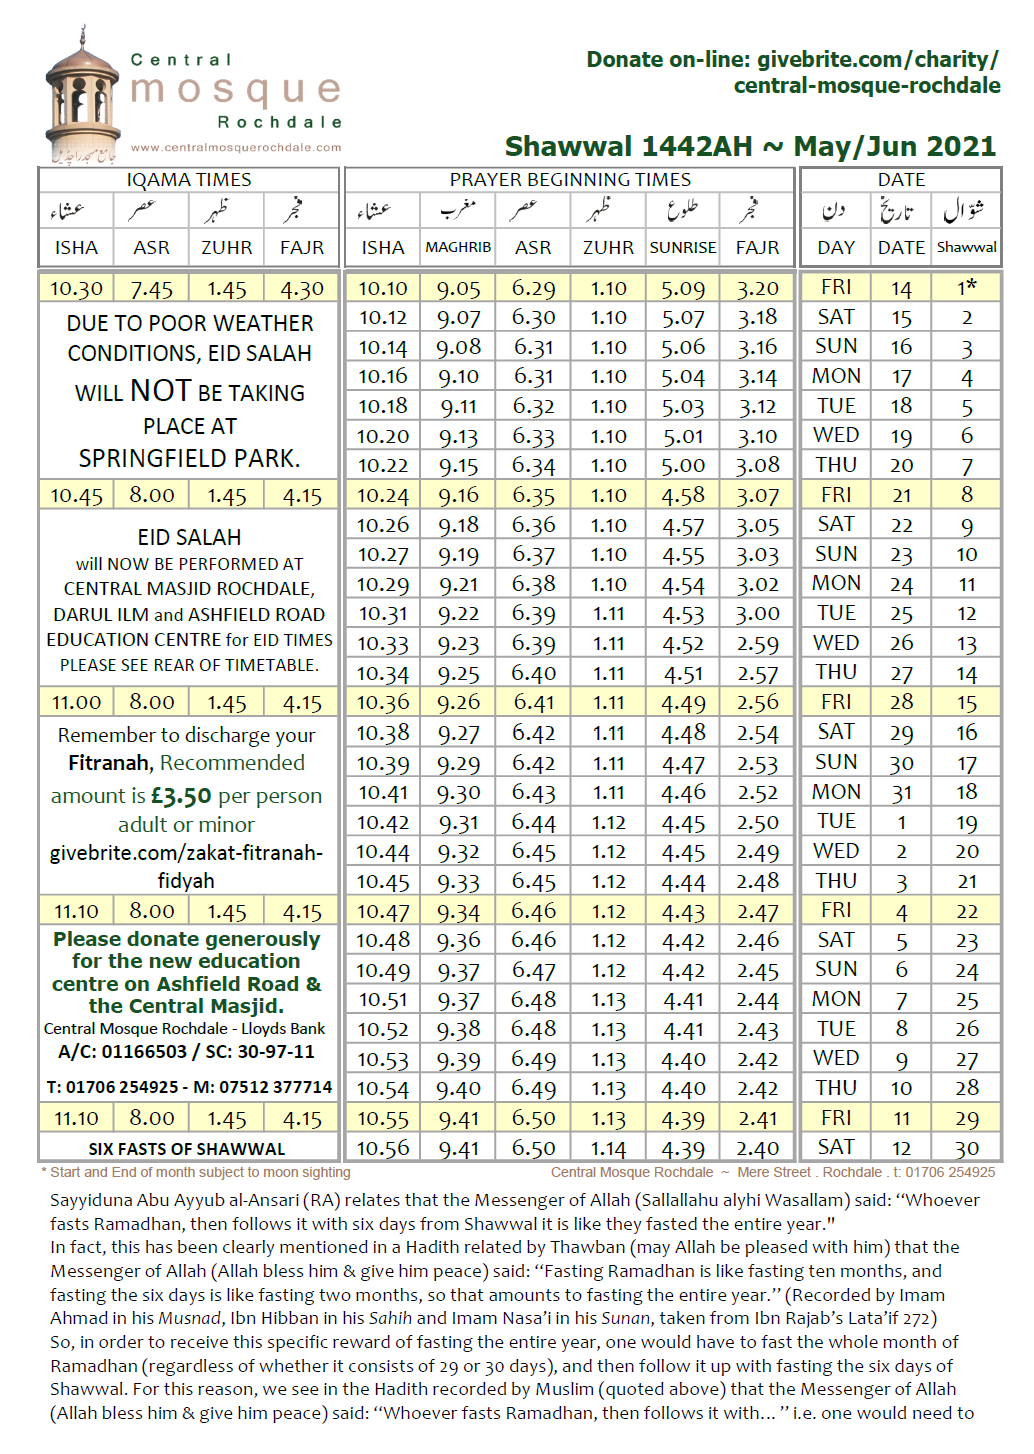 masjid usman namaz timetable leicester